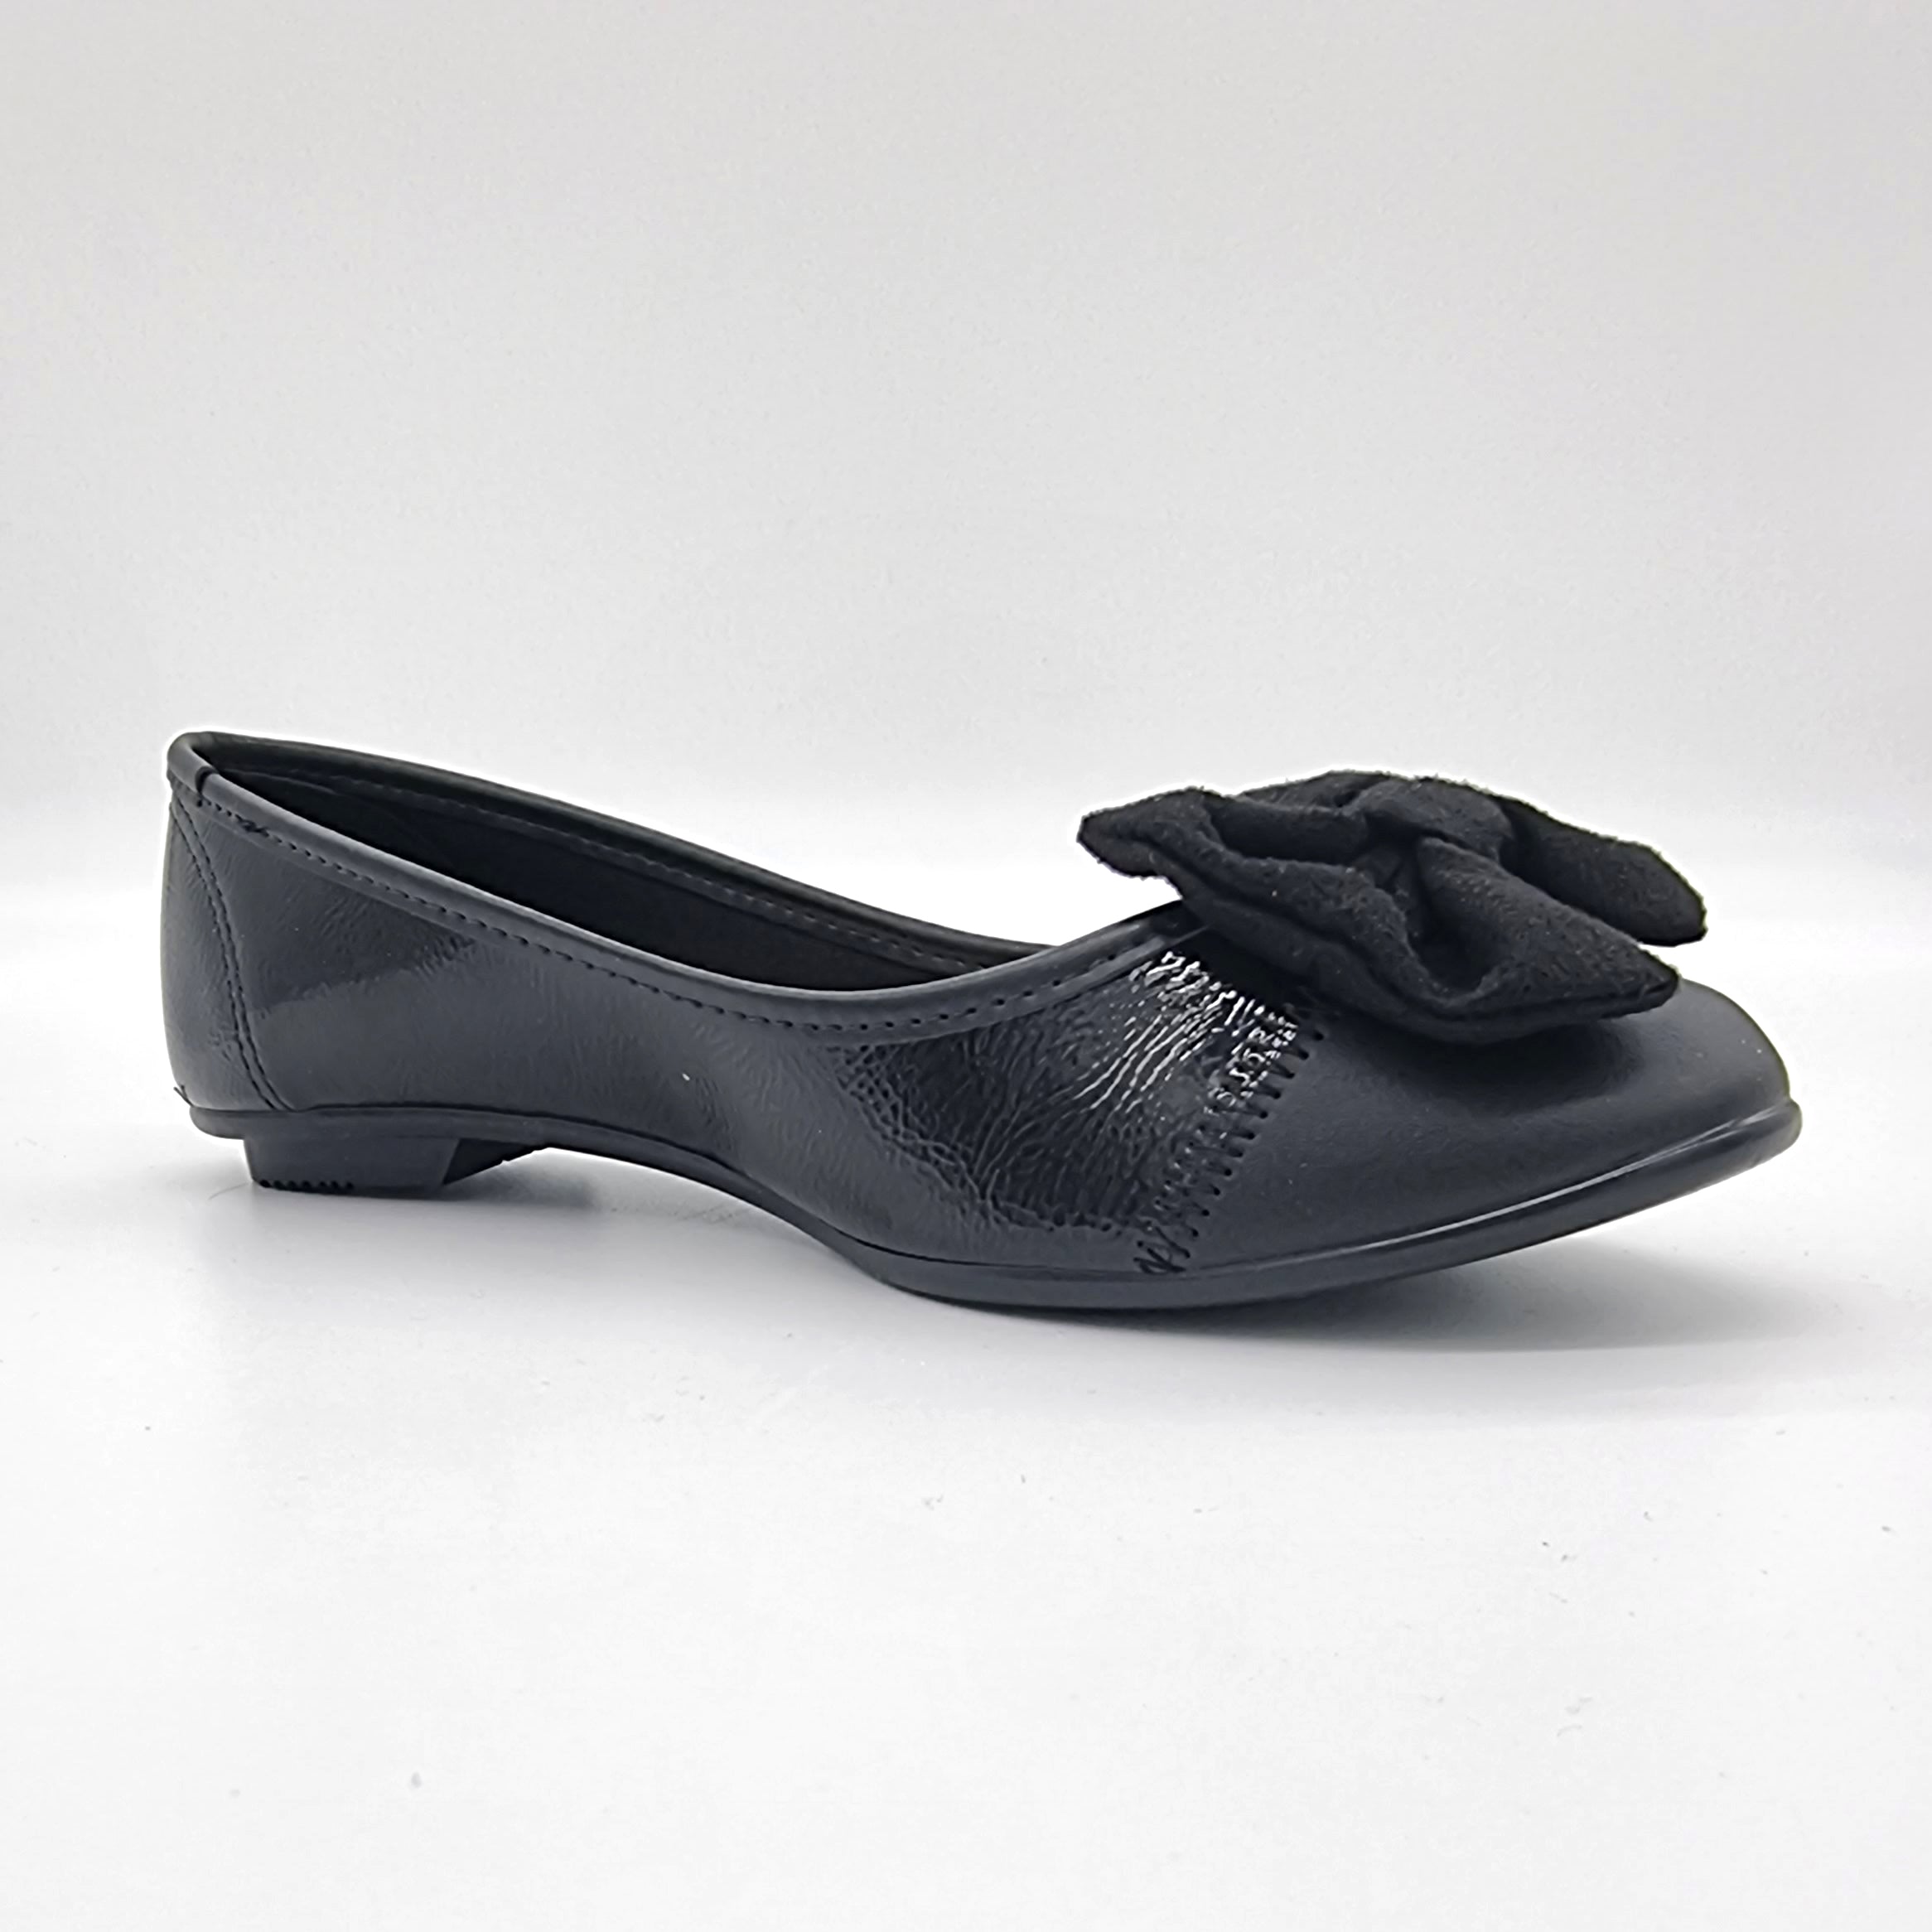 Moleca 5027-1445 Round Toe Ballerina Flat in Black